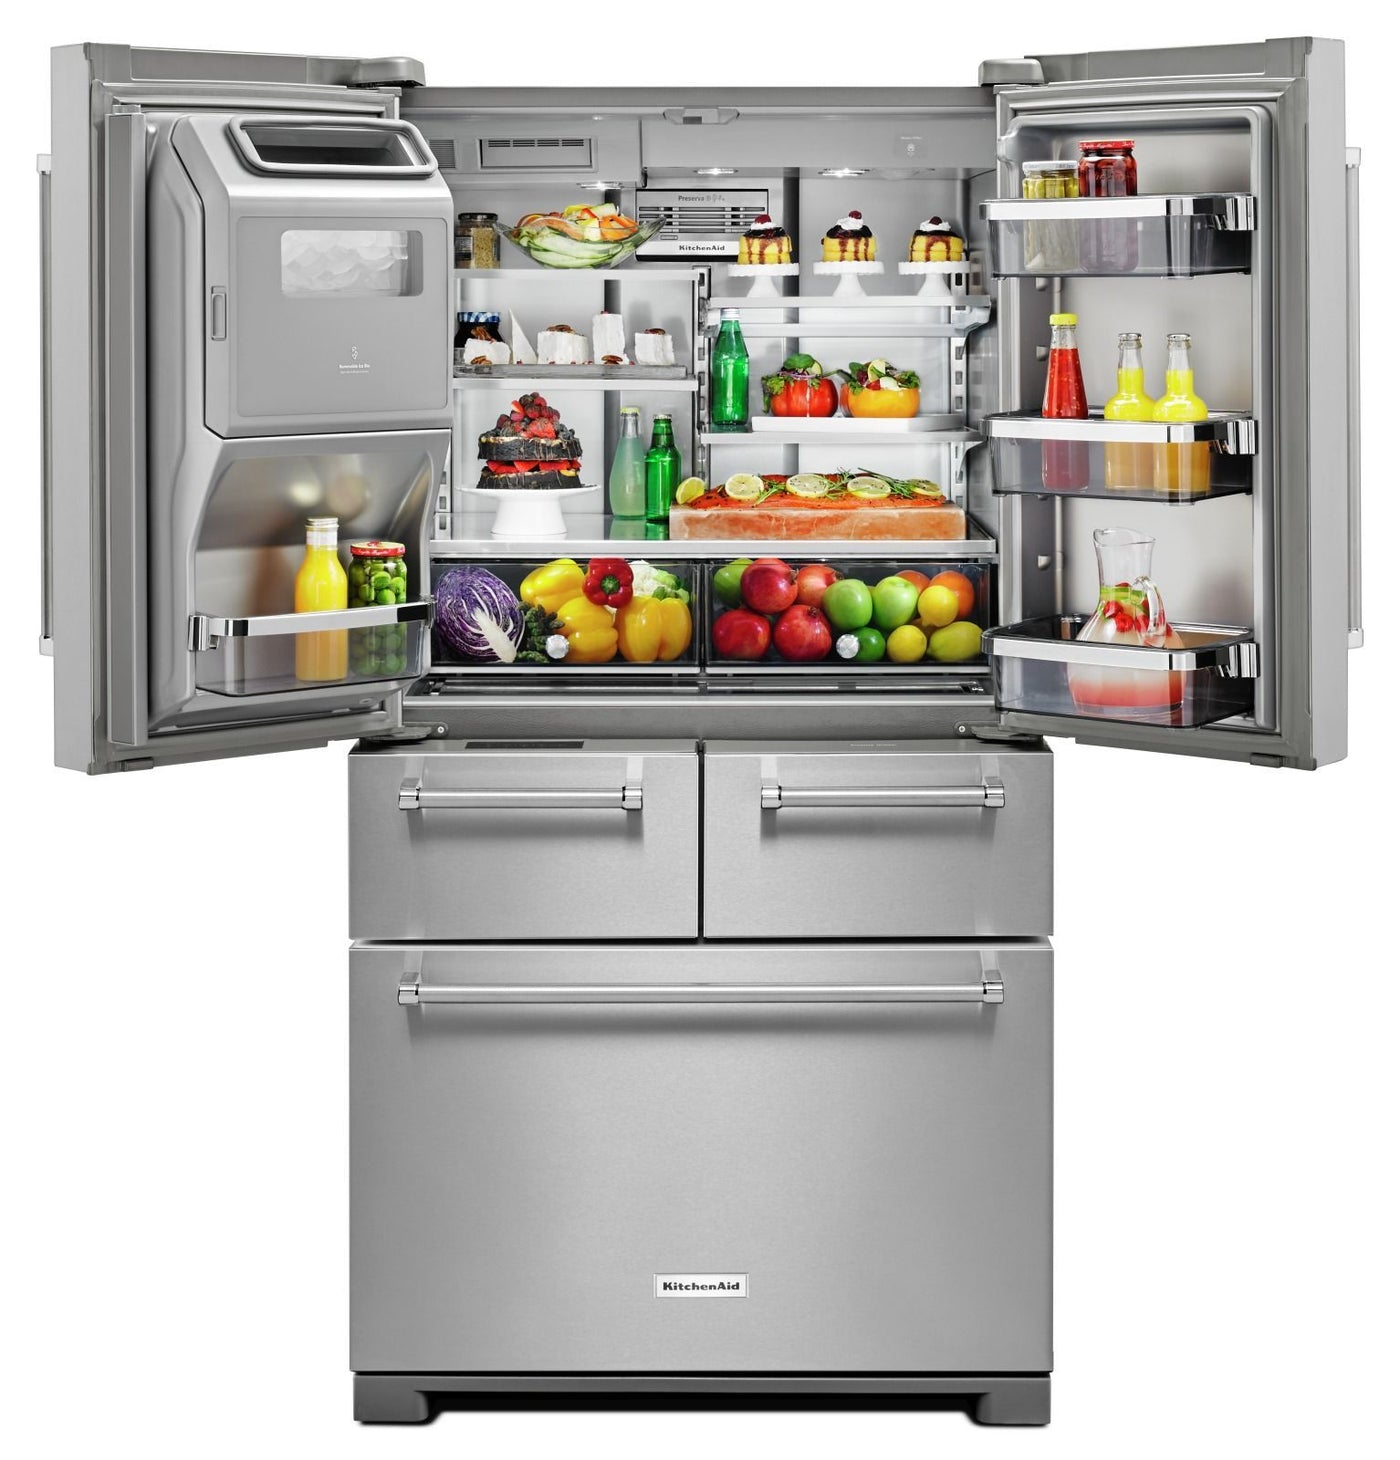 KitchenAid Stainless Steel French Door Refrigerator (25.8 Cu.Ft.) - KRMF706ESS